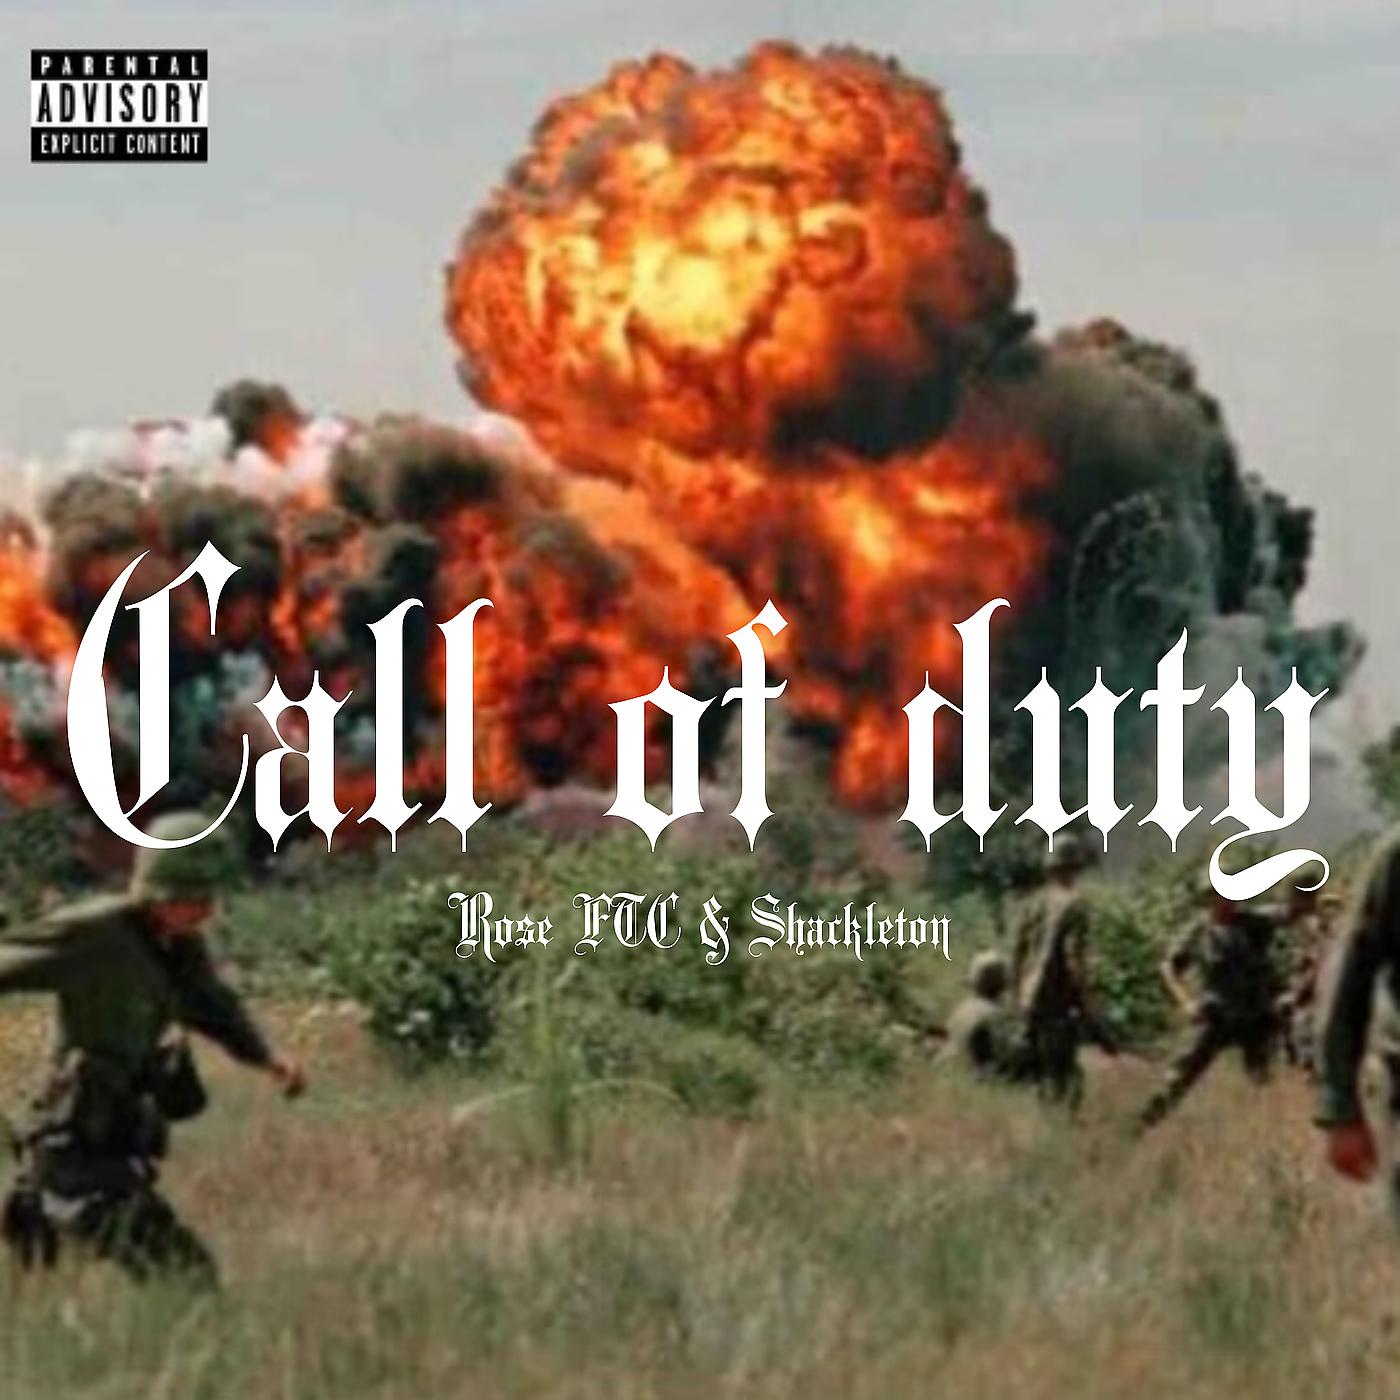 Постер альбома Call of Duty